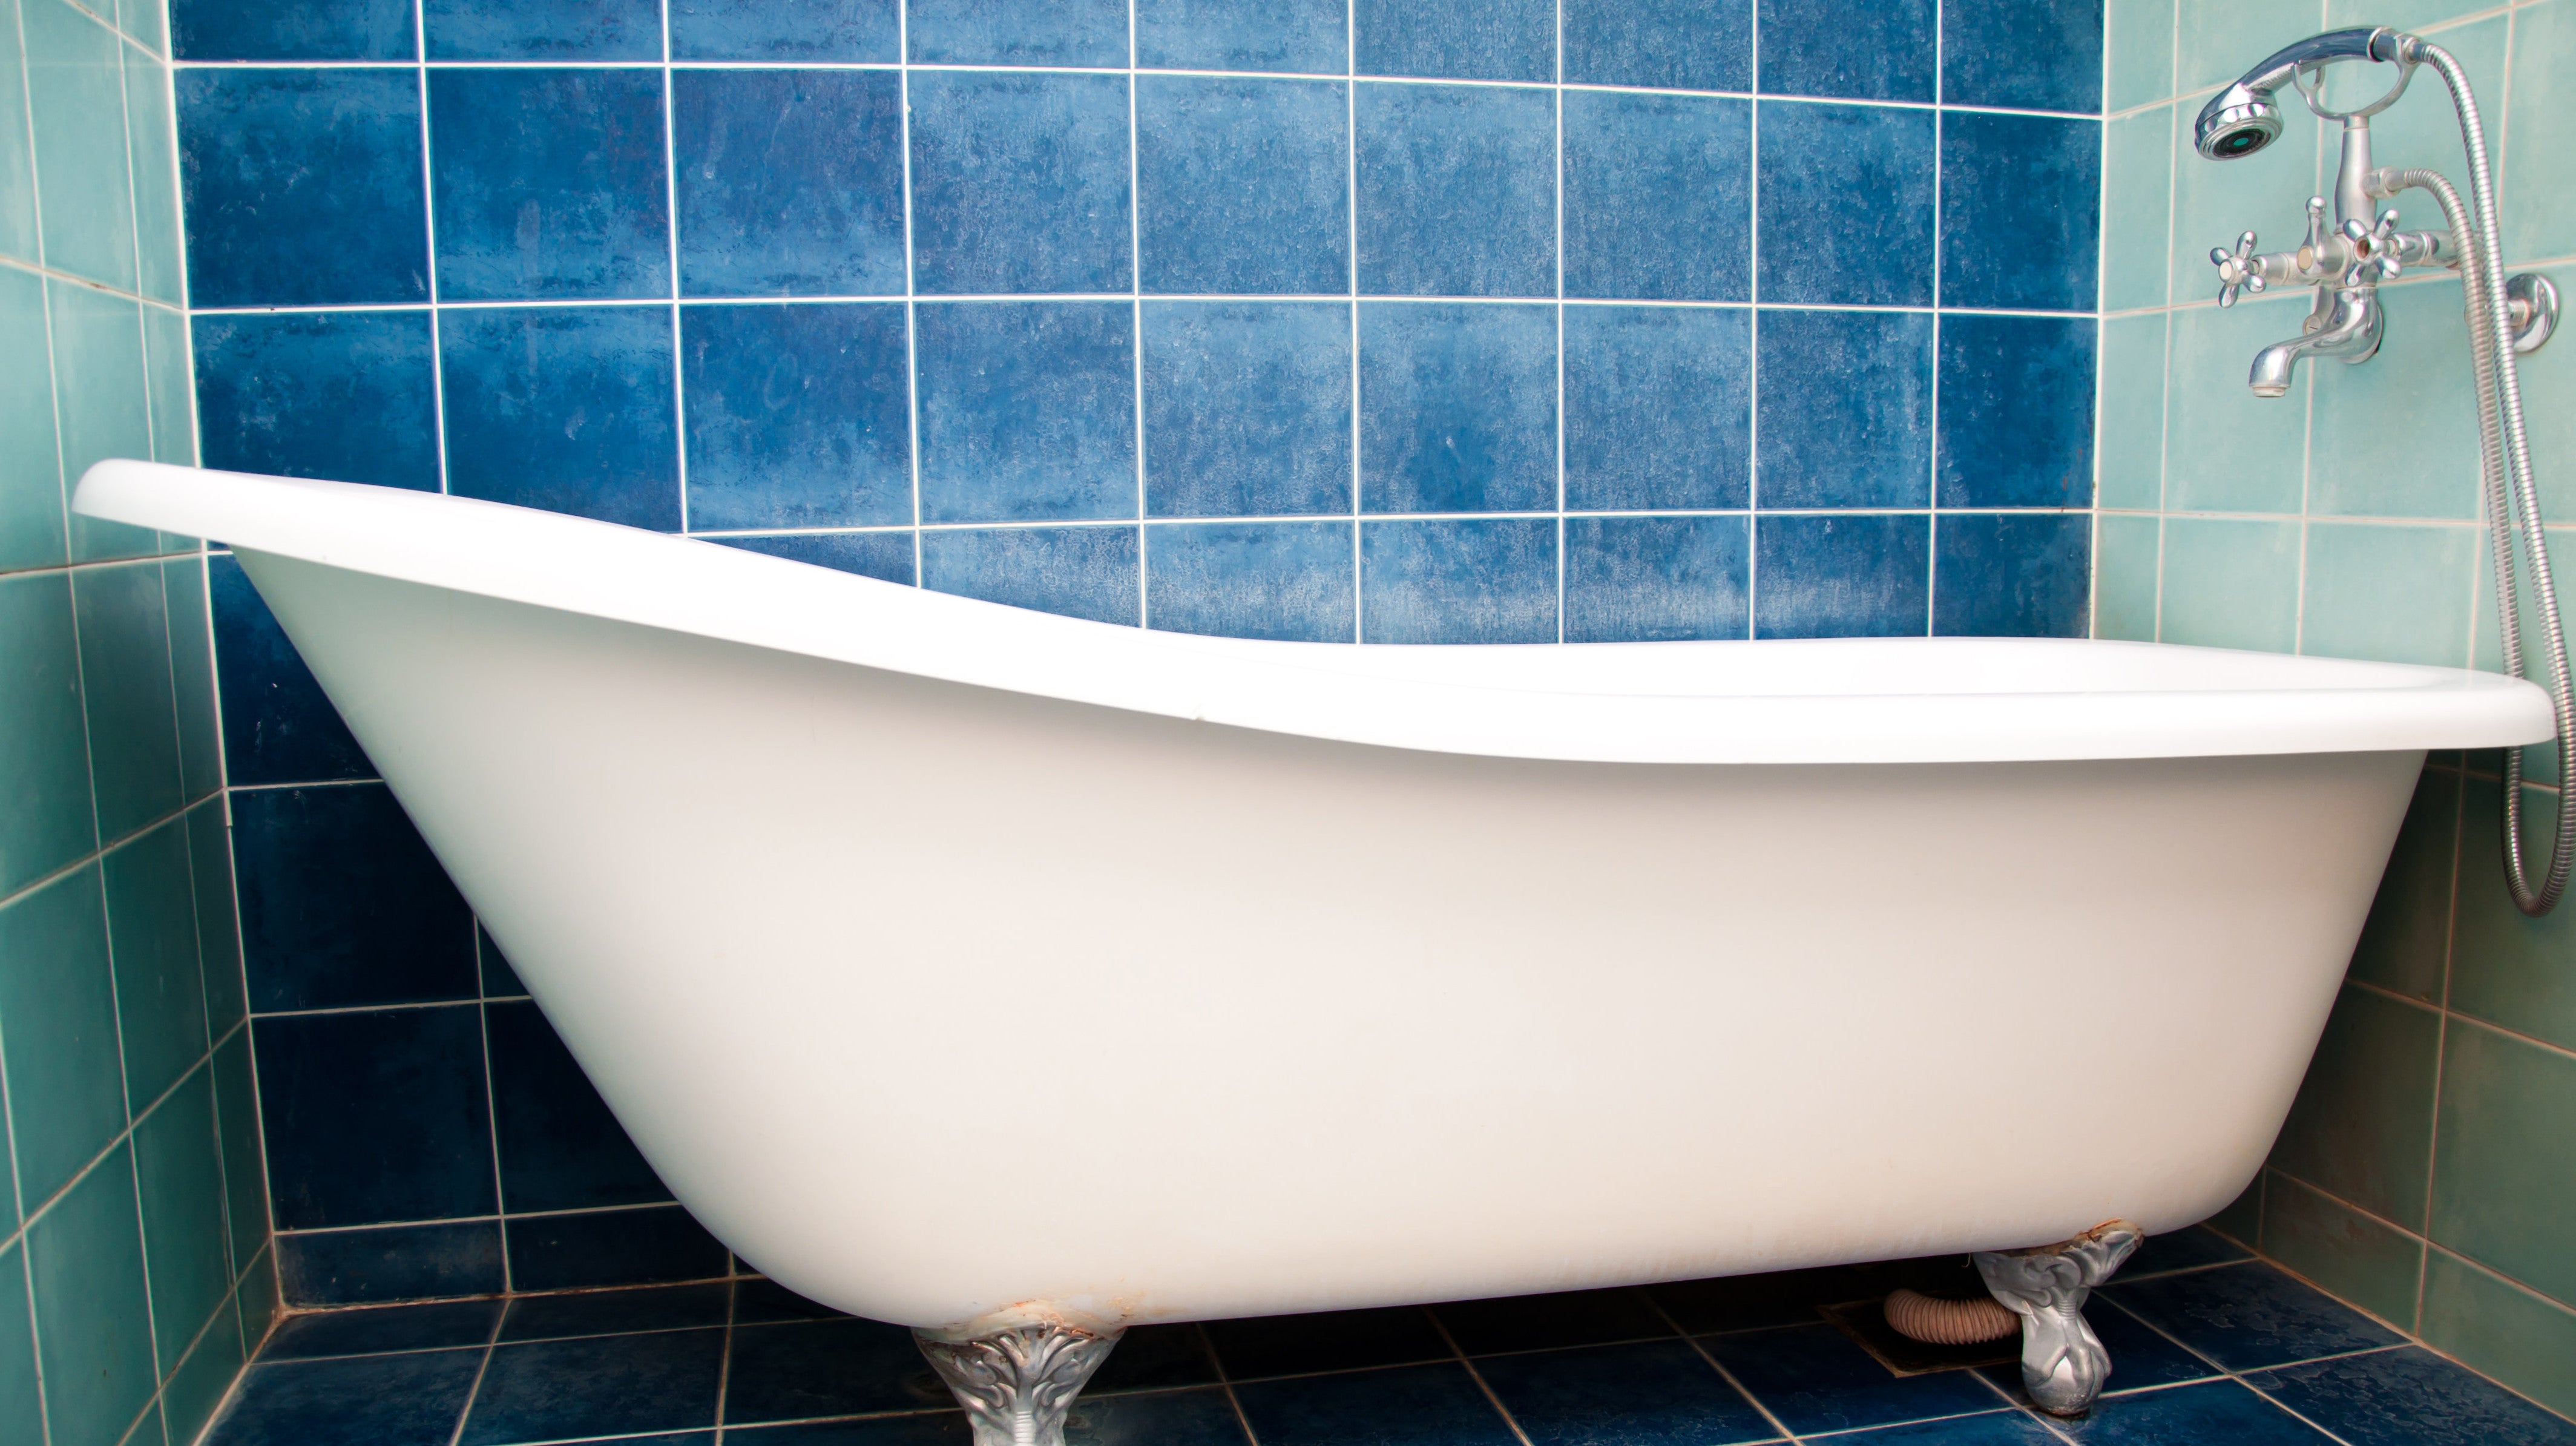 How To Clean Your Bathtub And Tile, Clean Bathtub With Bleach Or Vinegar